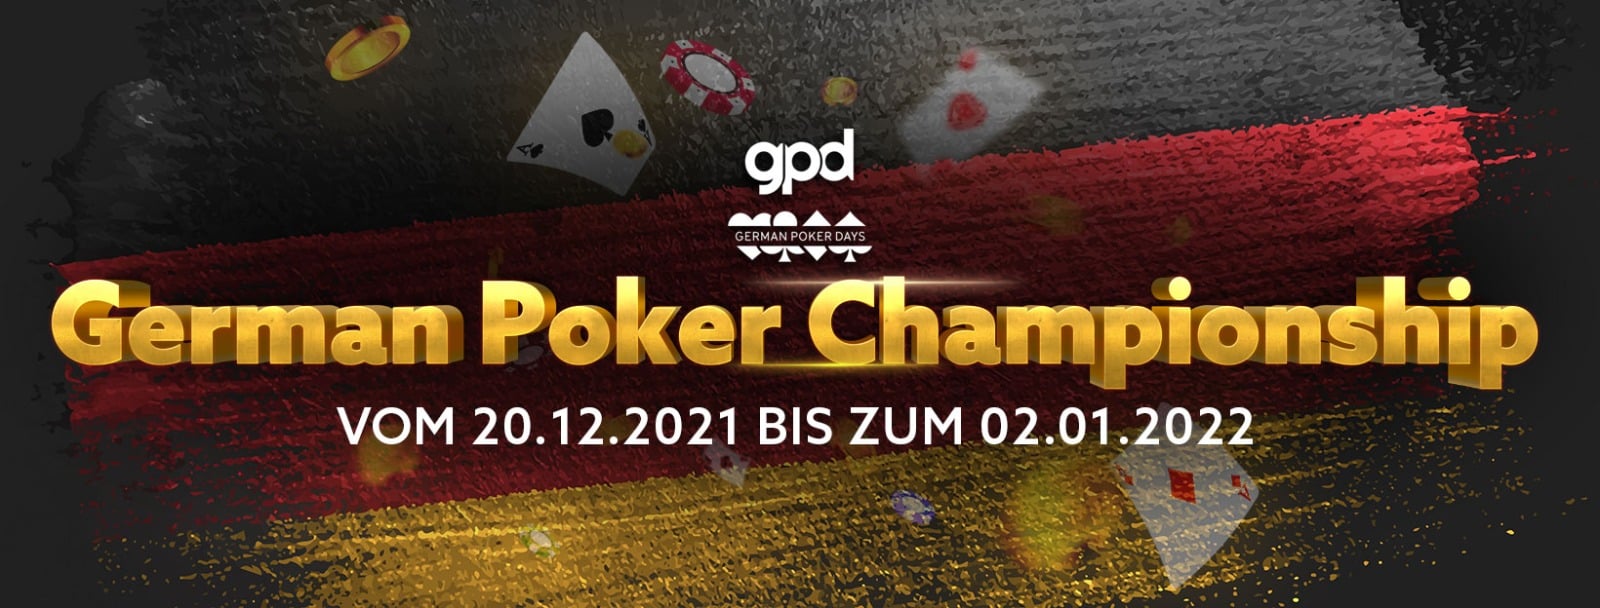 German Poker Championship – Starttag 4